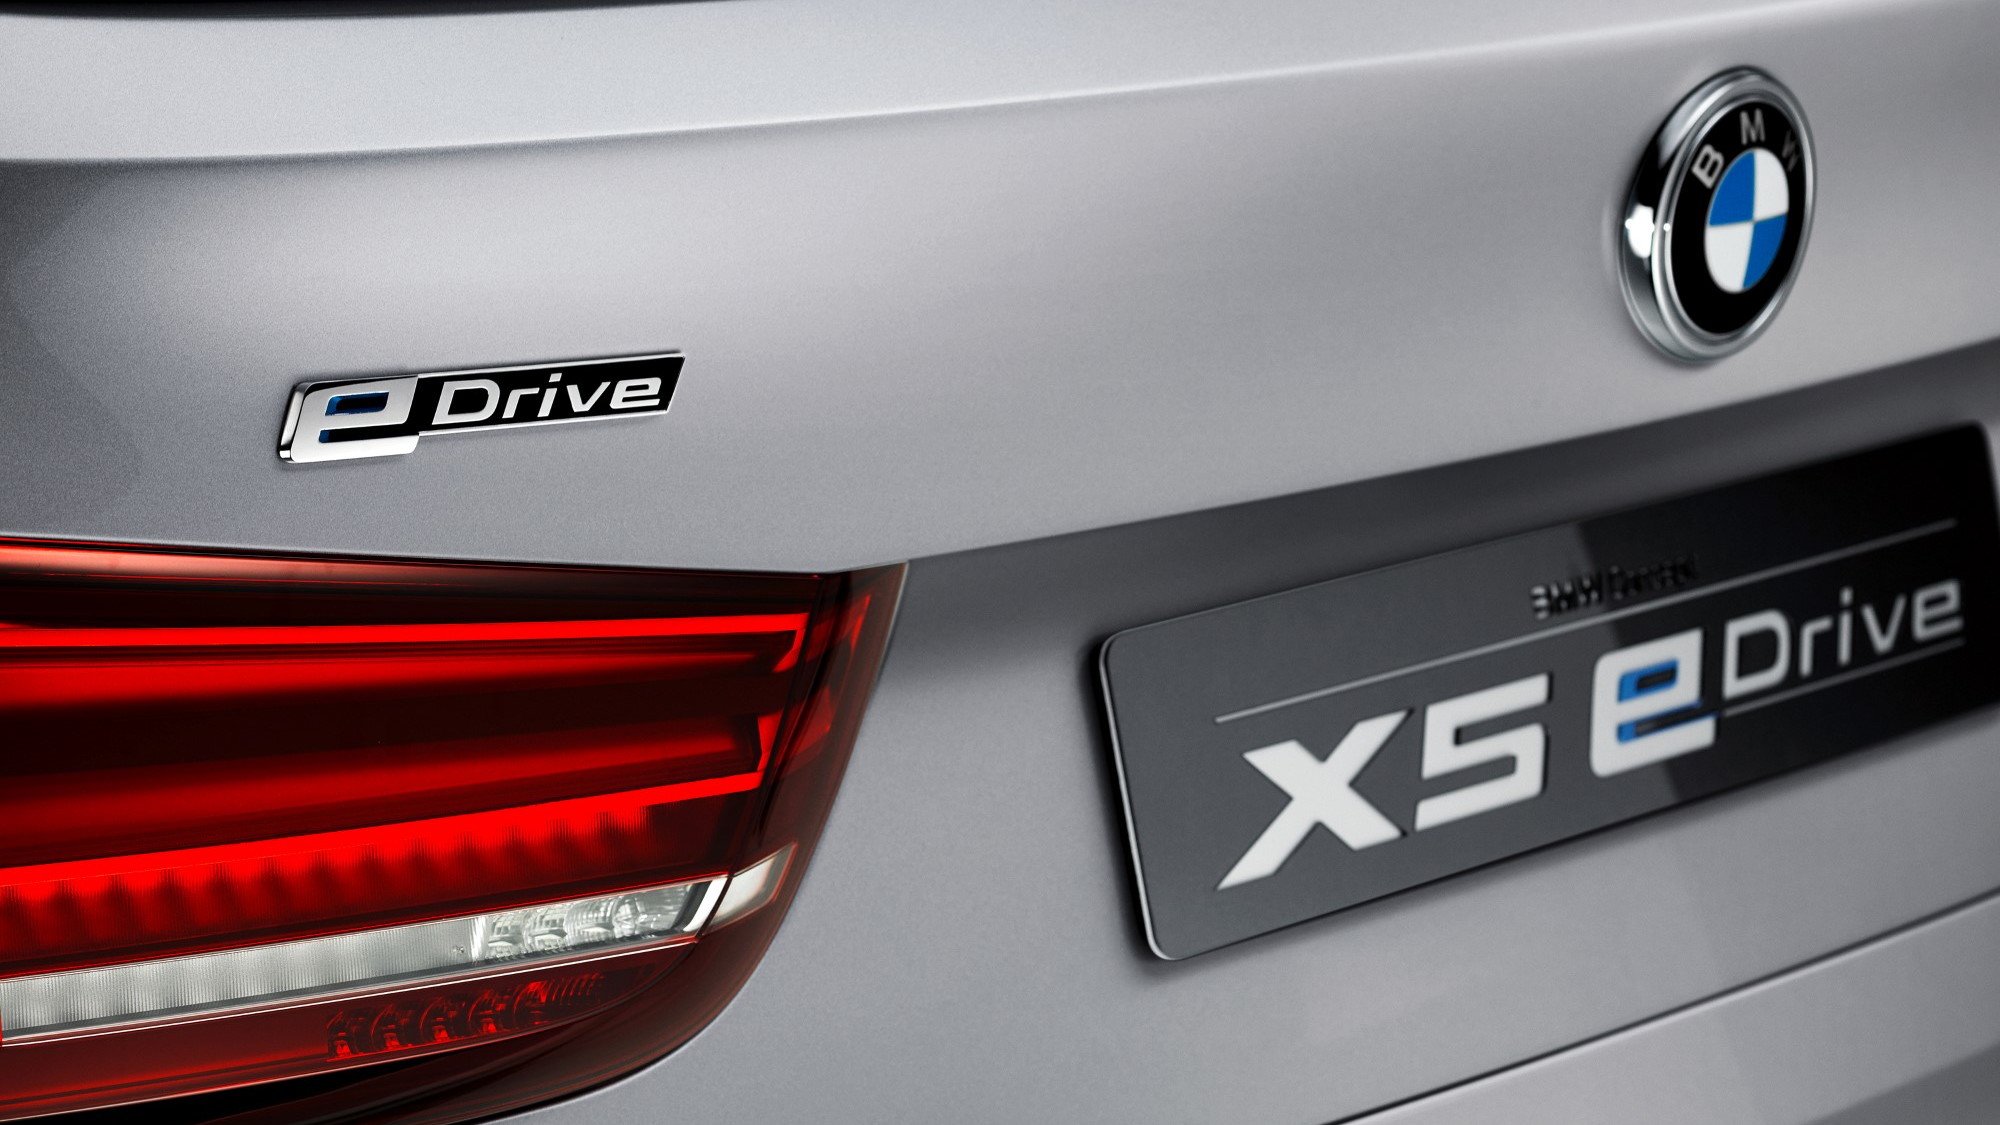 BMW Concept X5 eDrive plug-in hybrid